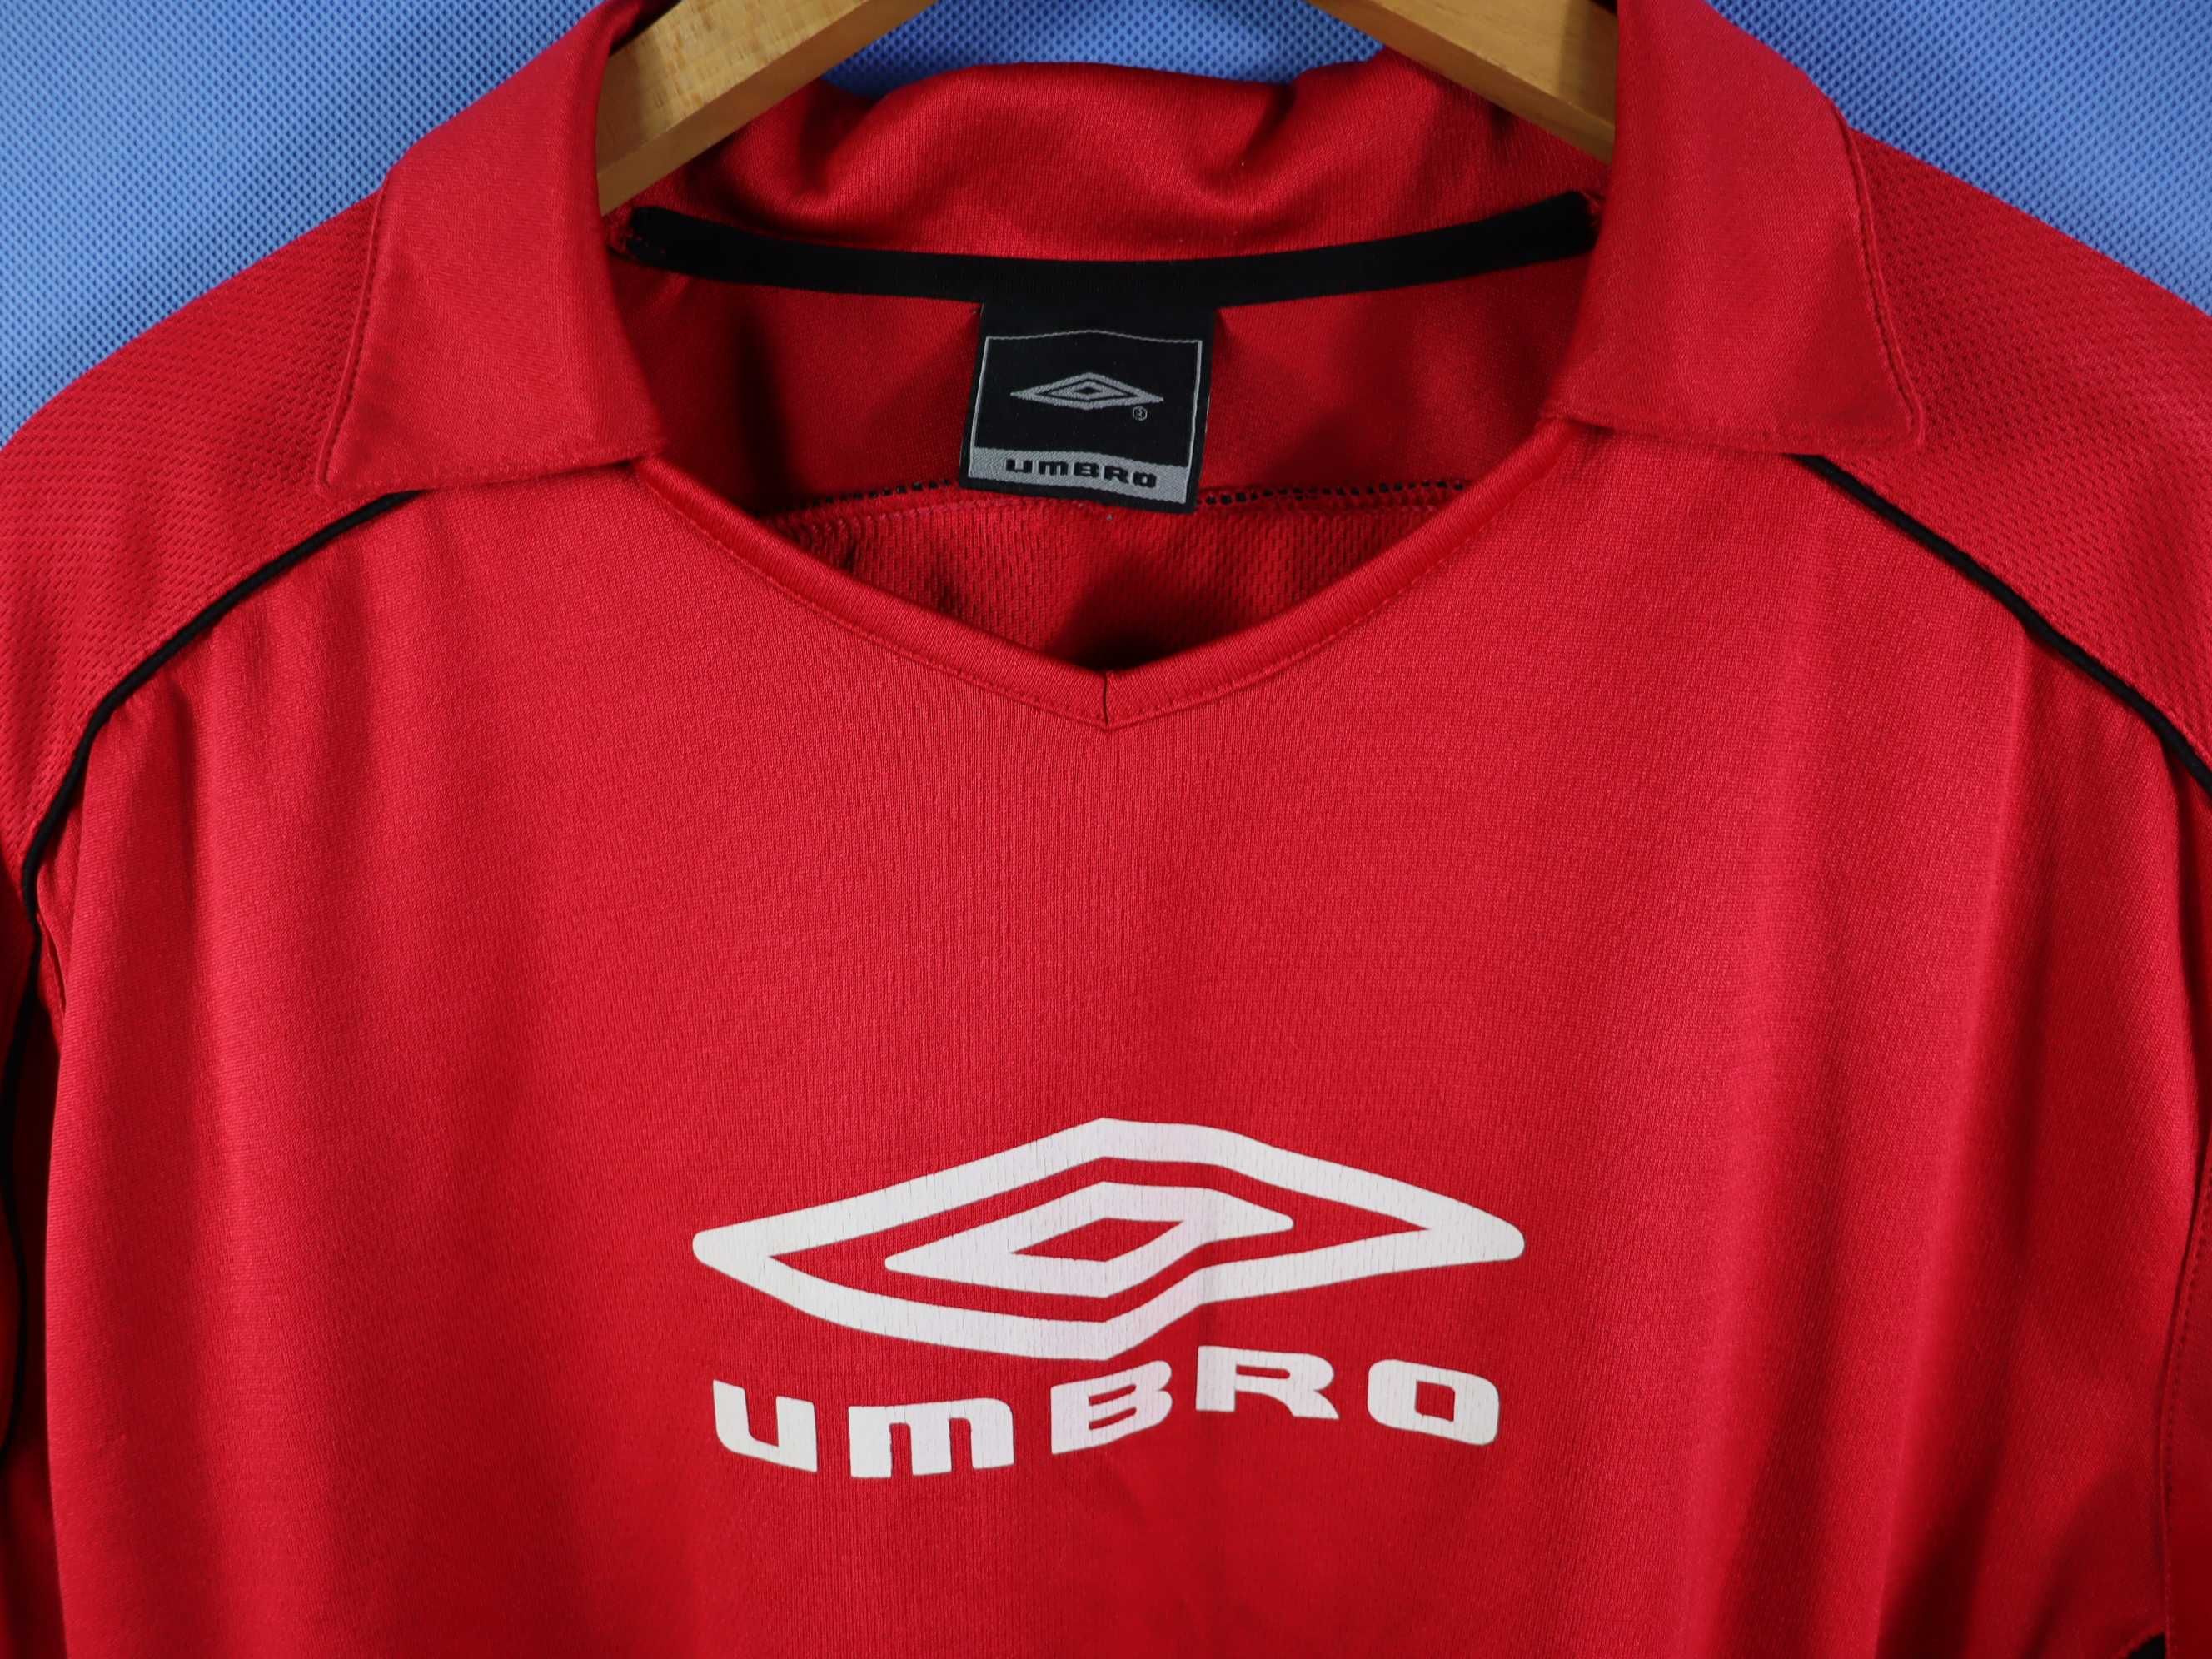 Umbro koszulka sportowa piłkarska męska t-shirt retro vintage M / L